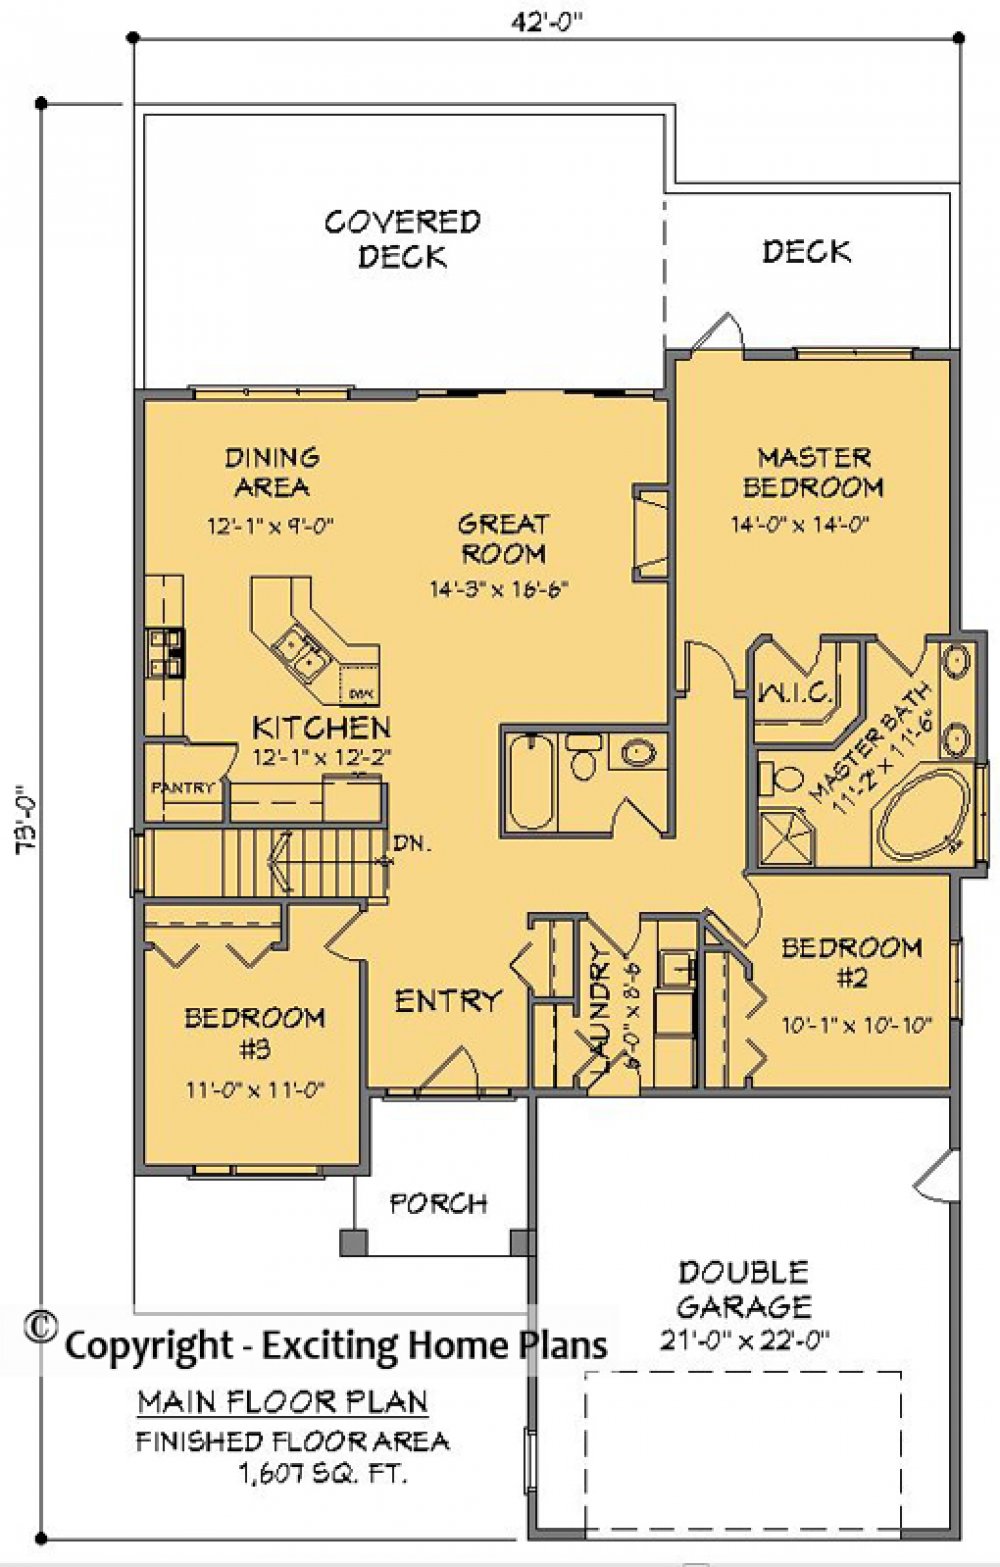 House Plan E1711-10 Main Floor Plan